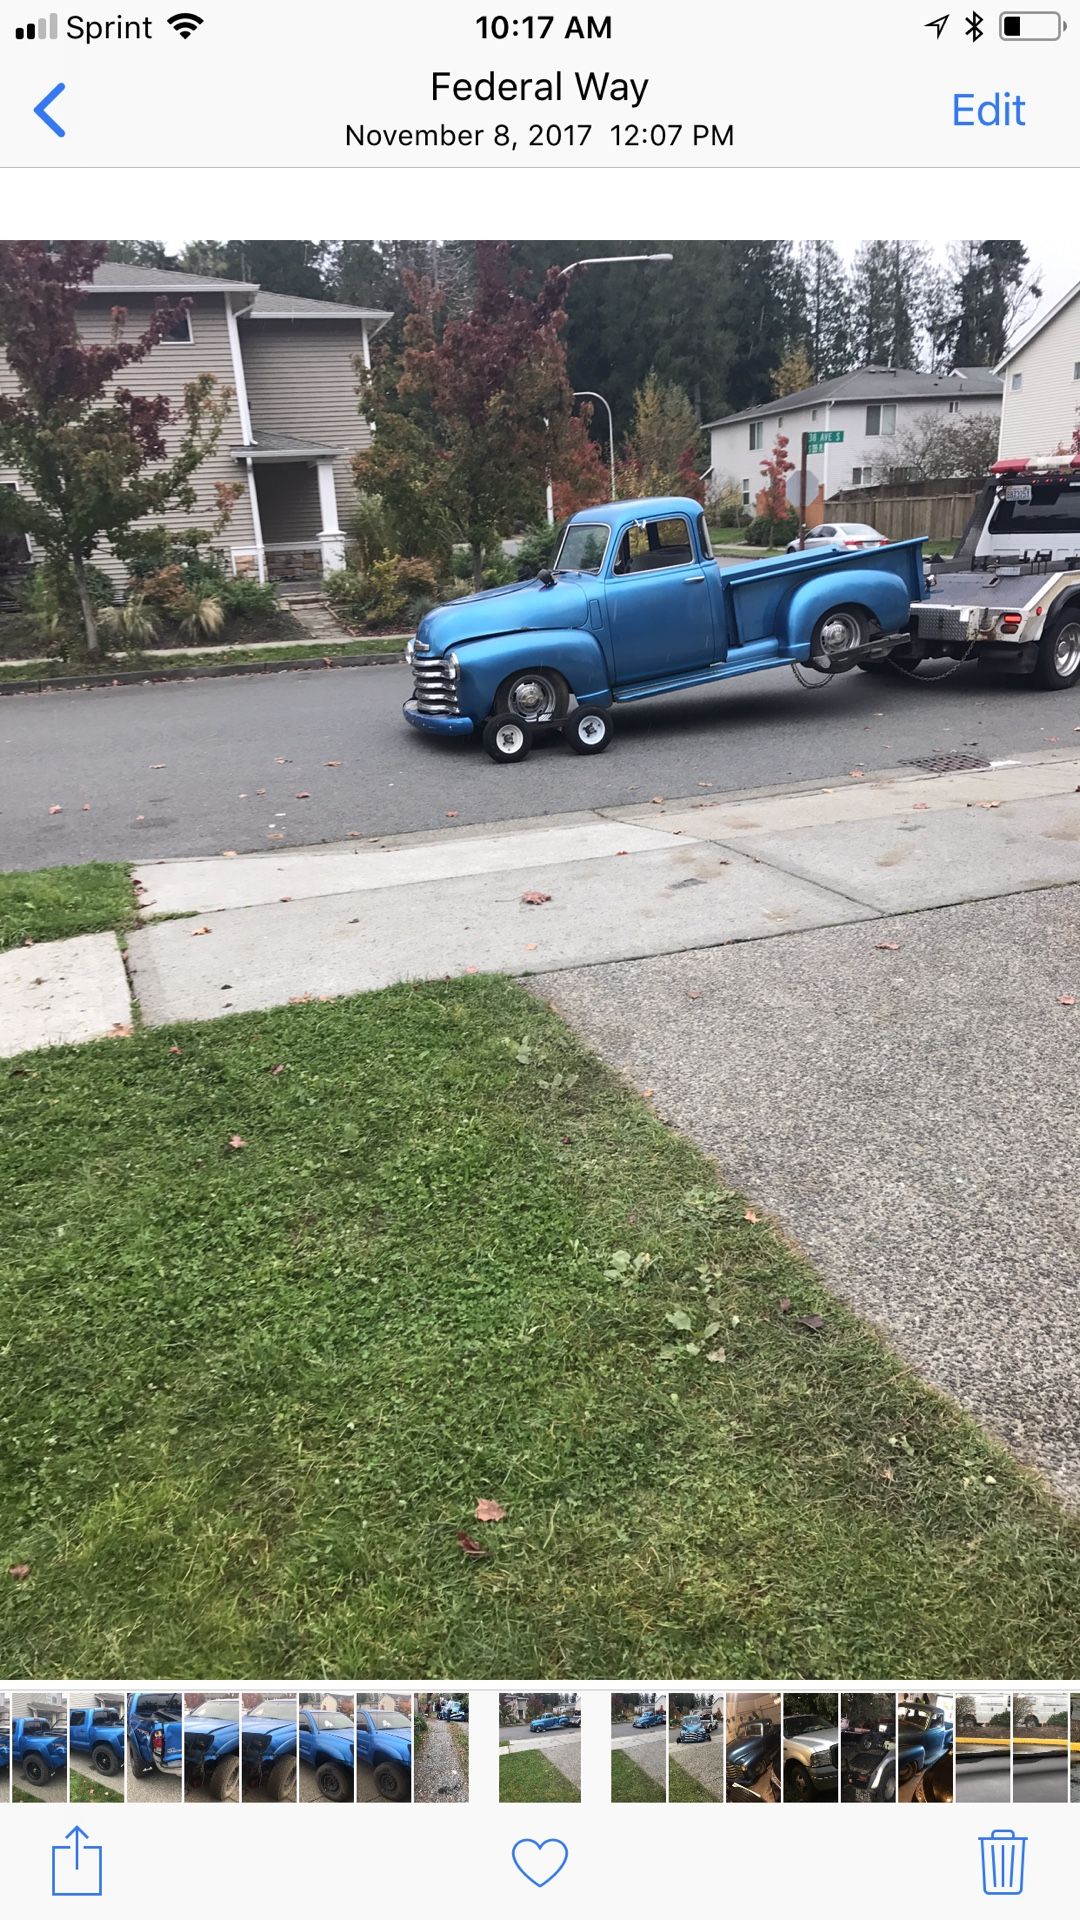 1949 Chevy truck